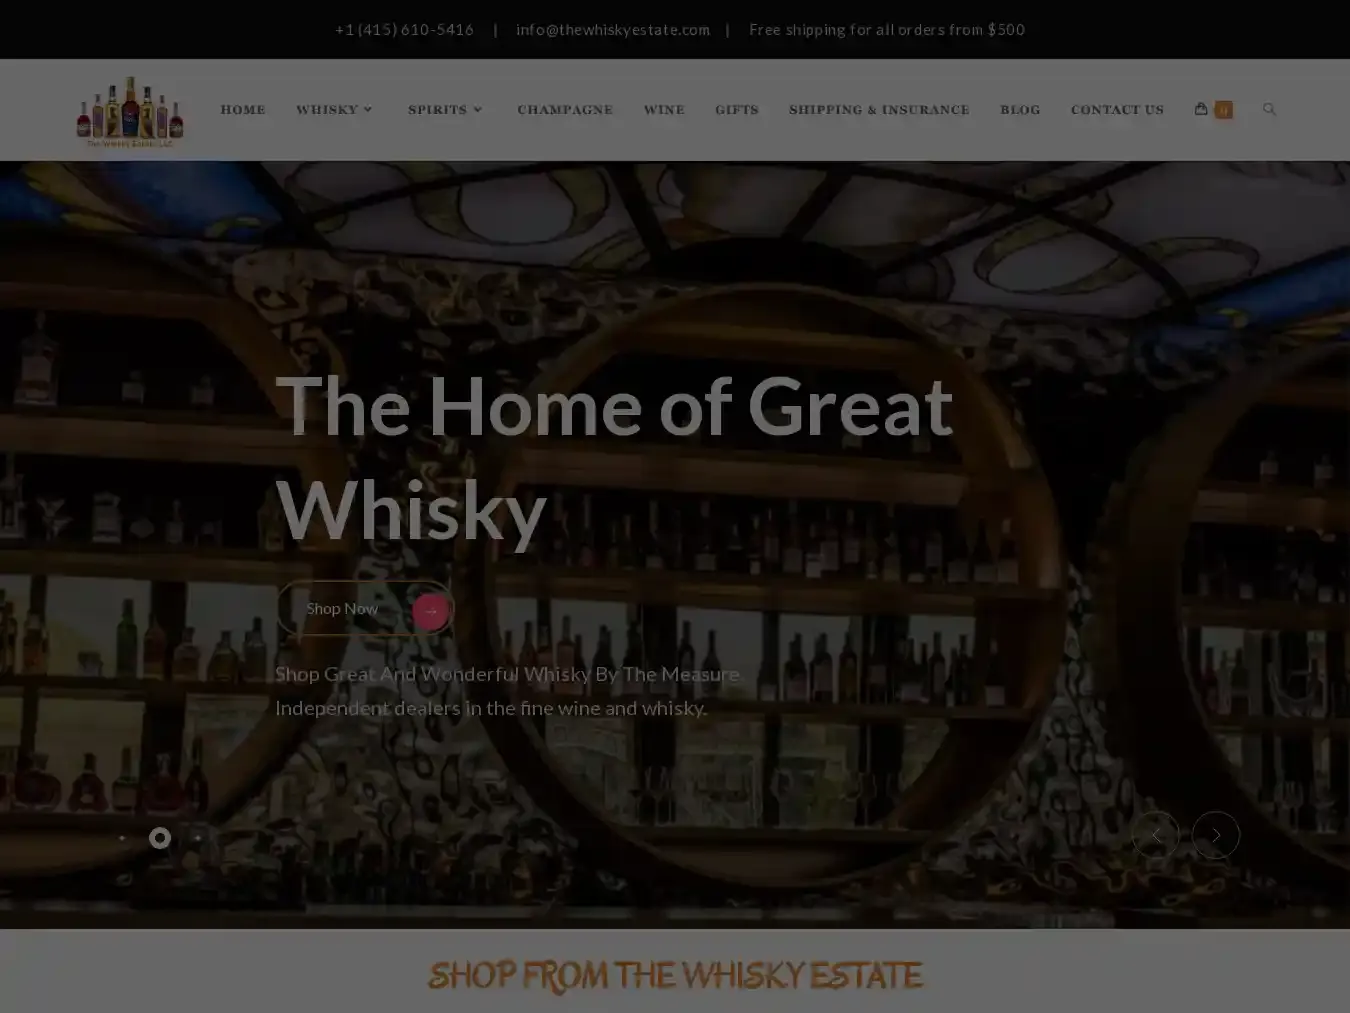 Thewhiskyestate.com Fraudulent Whisky website.